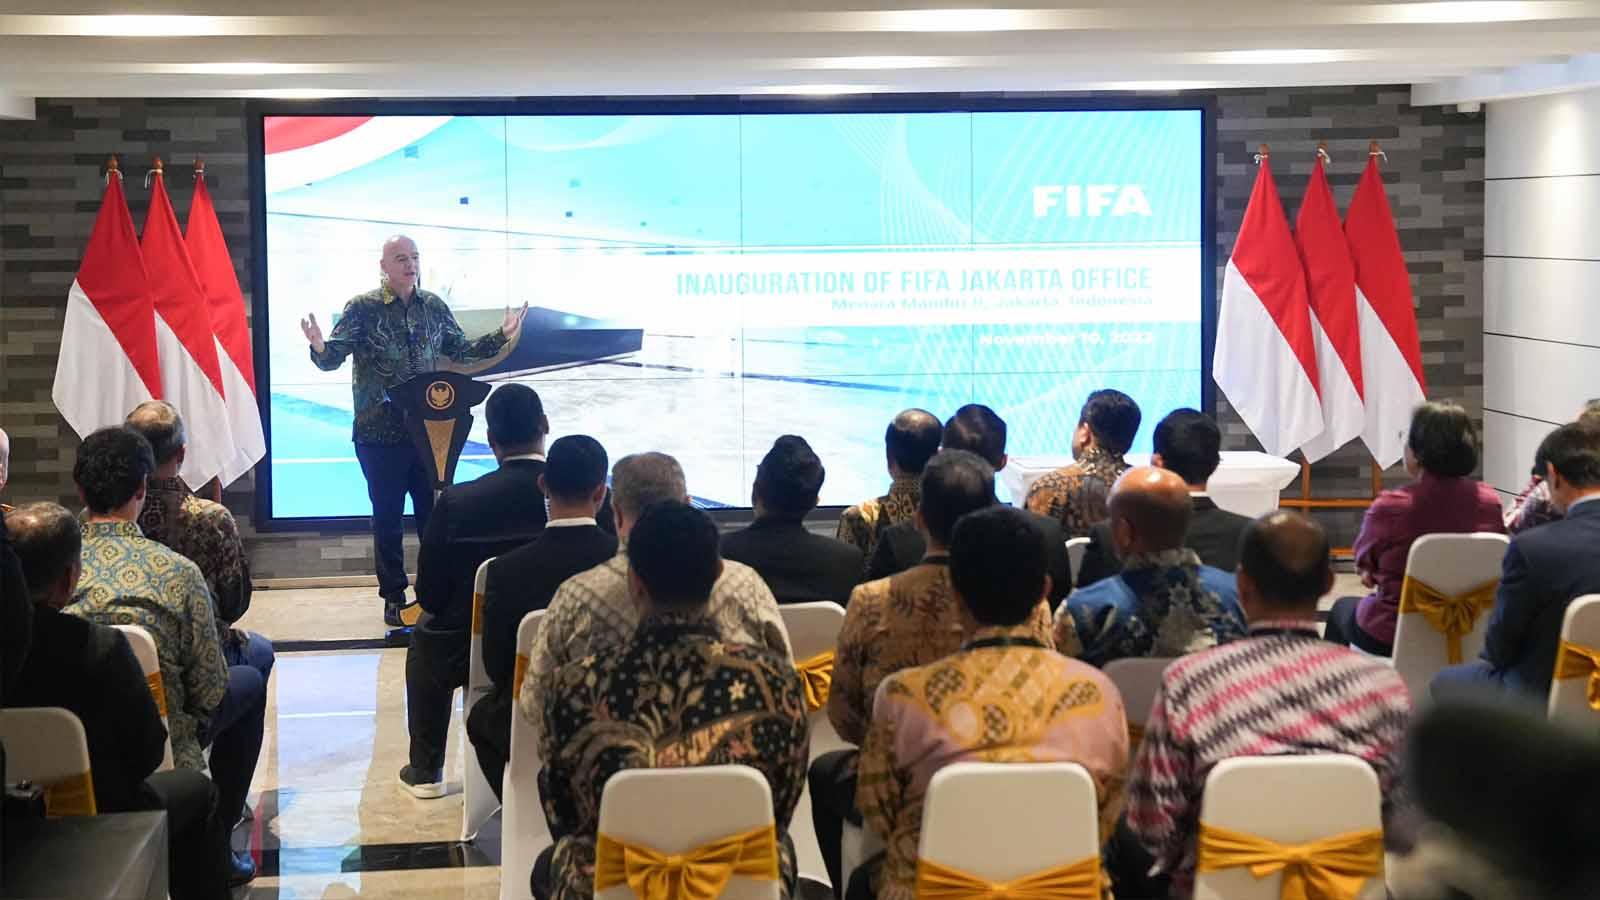 Presiden FIFA Gianni Infantino di acara peresmian kantor FIFA di Jakarta. (Foto: PSSI)